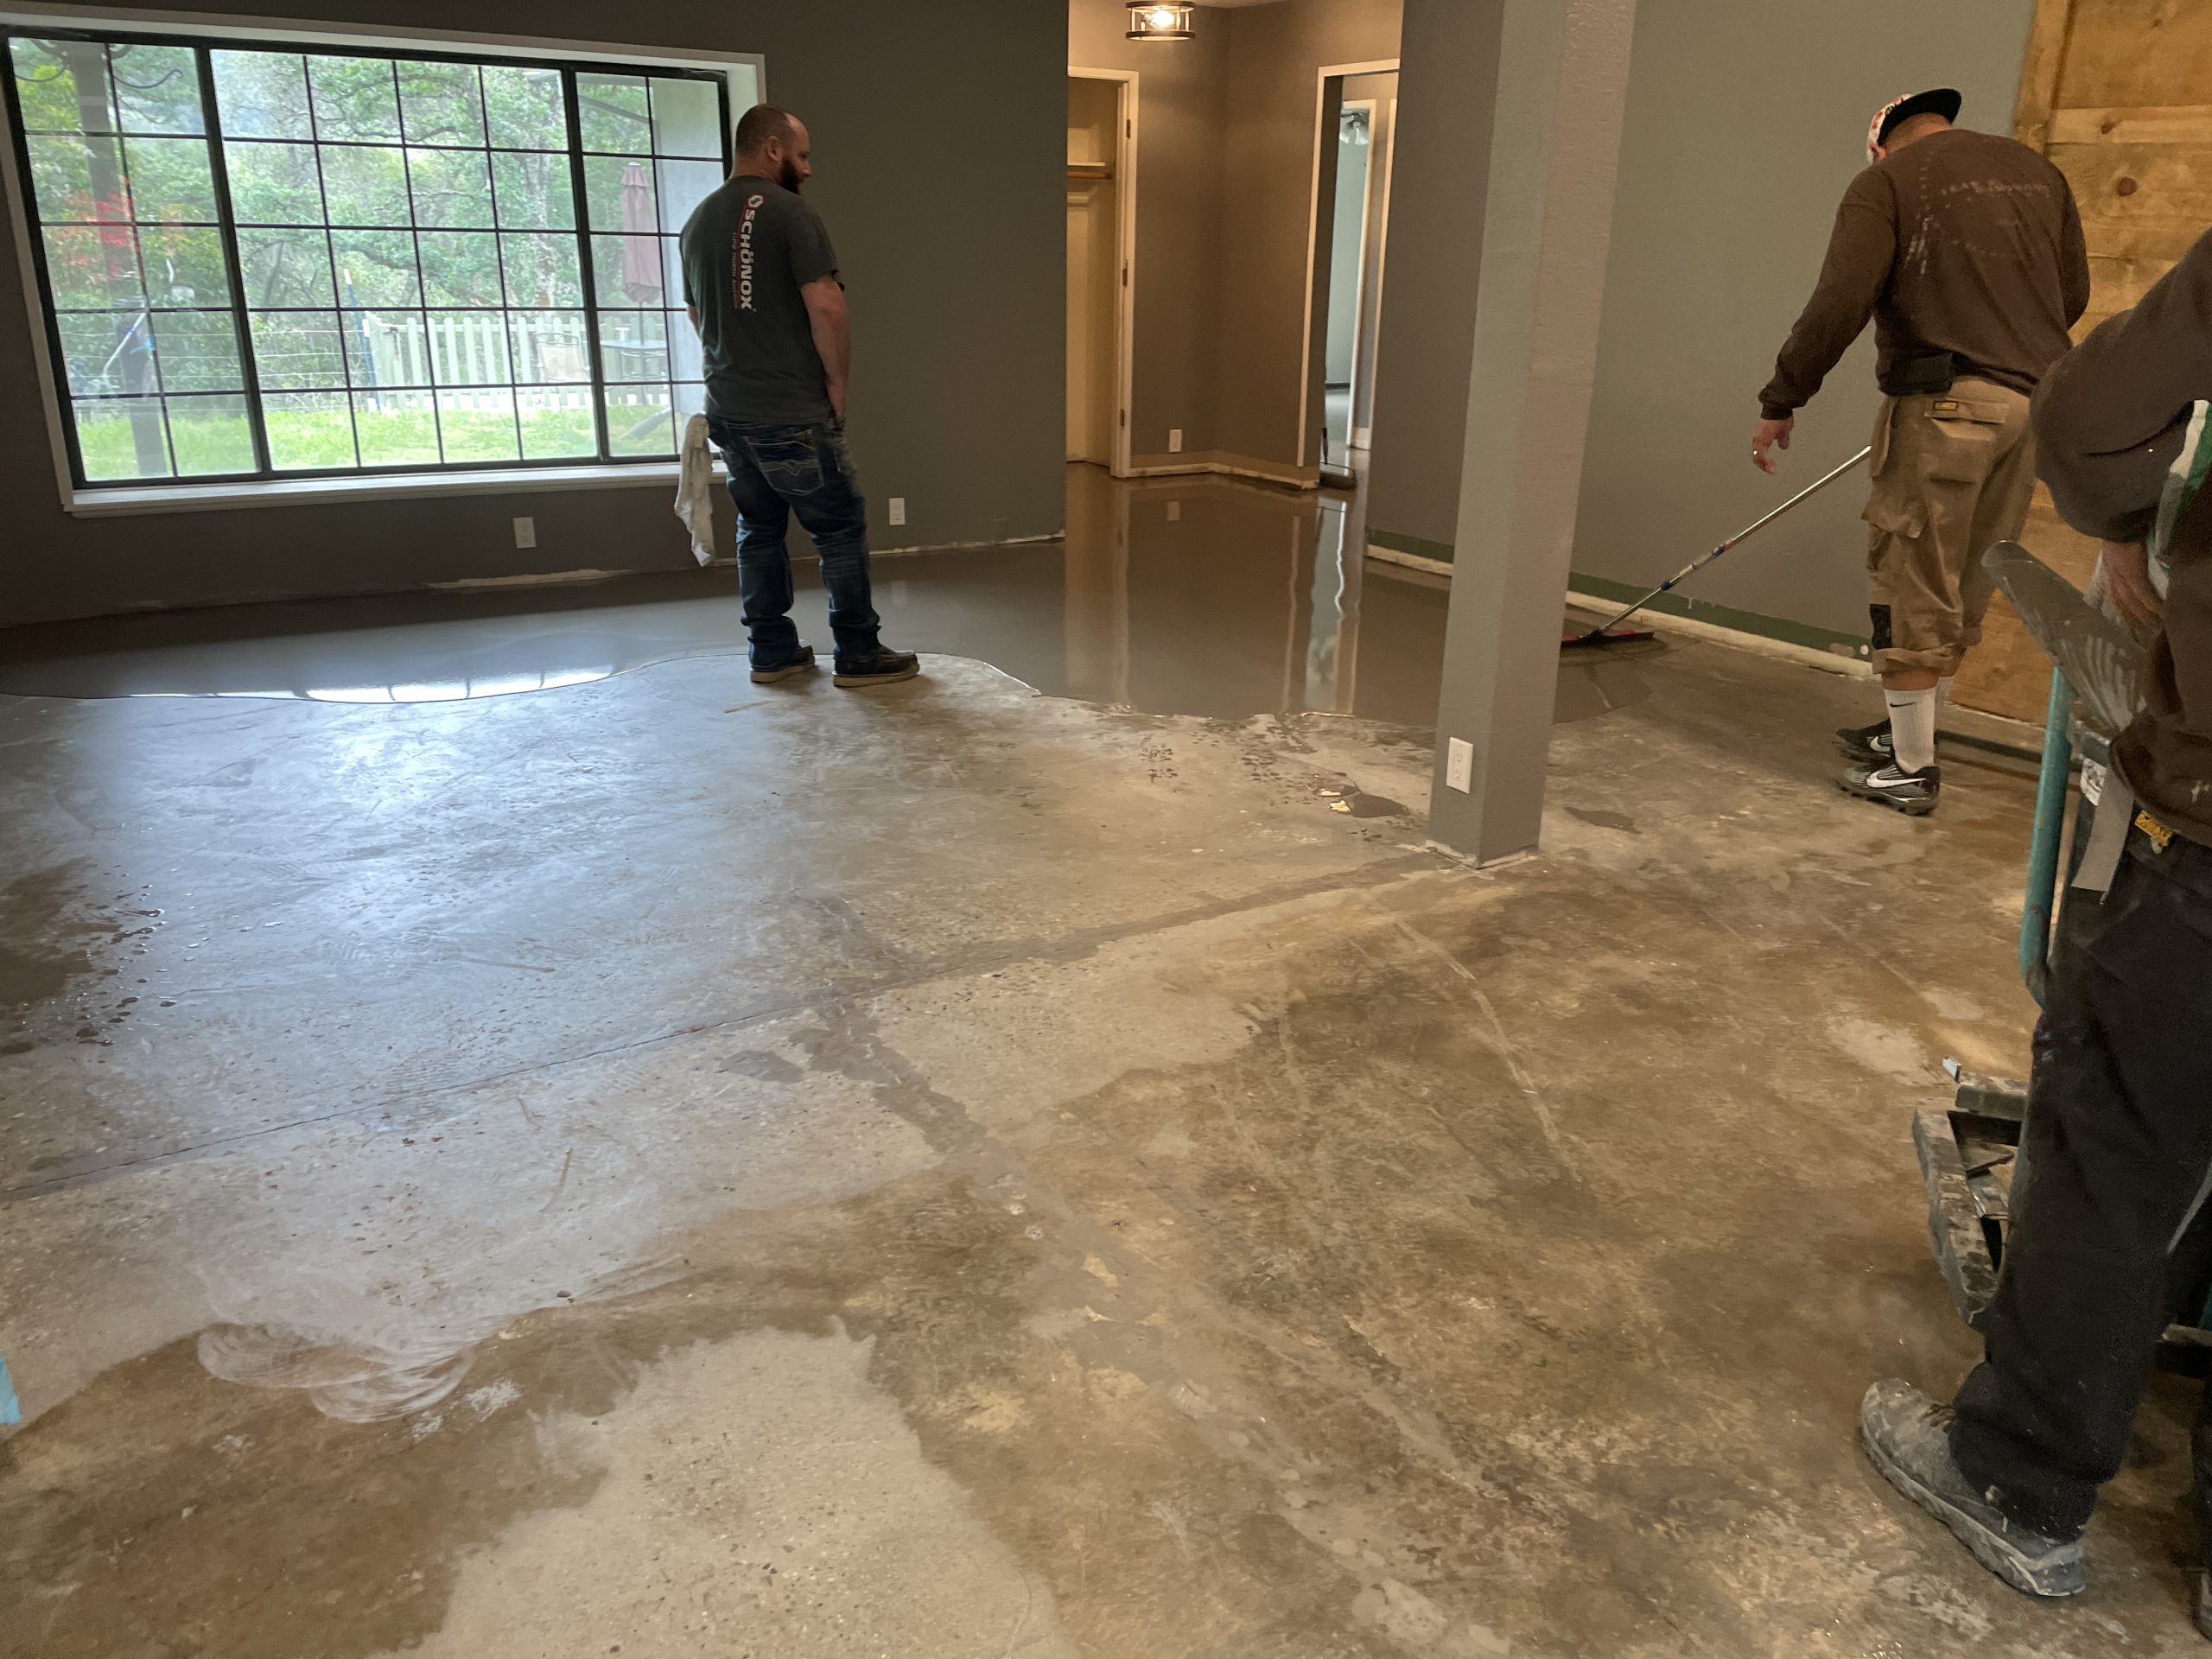 Employees preparing home's custom floor design